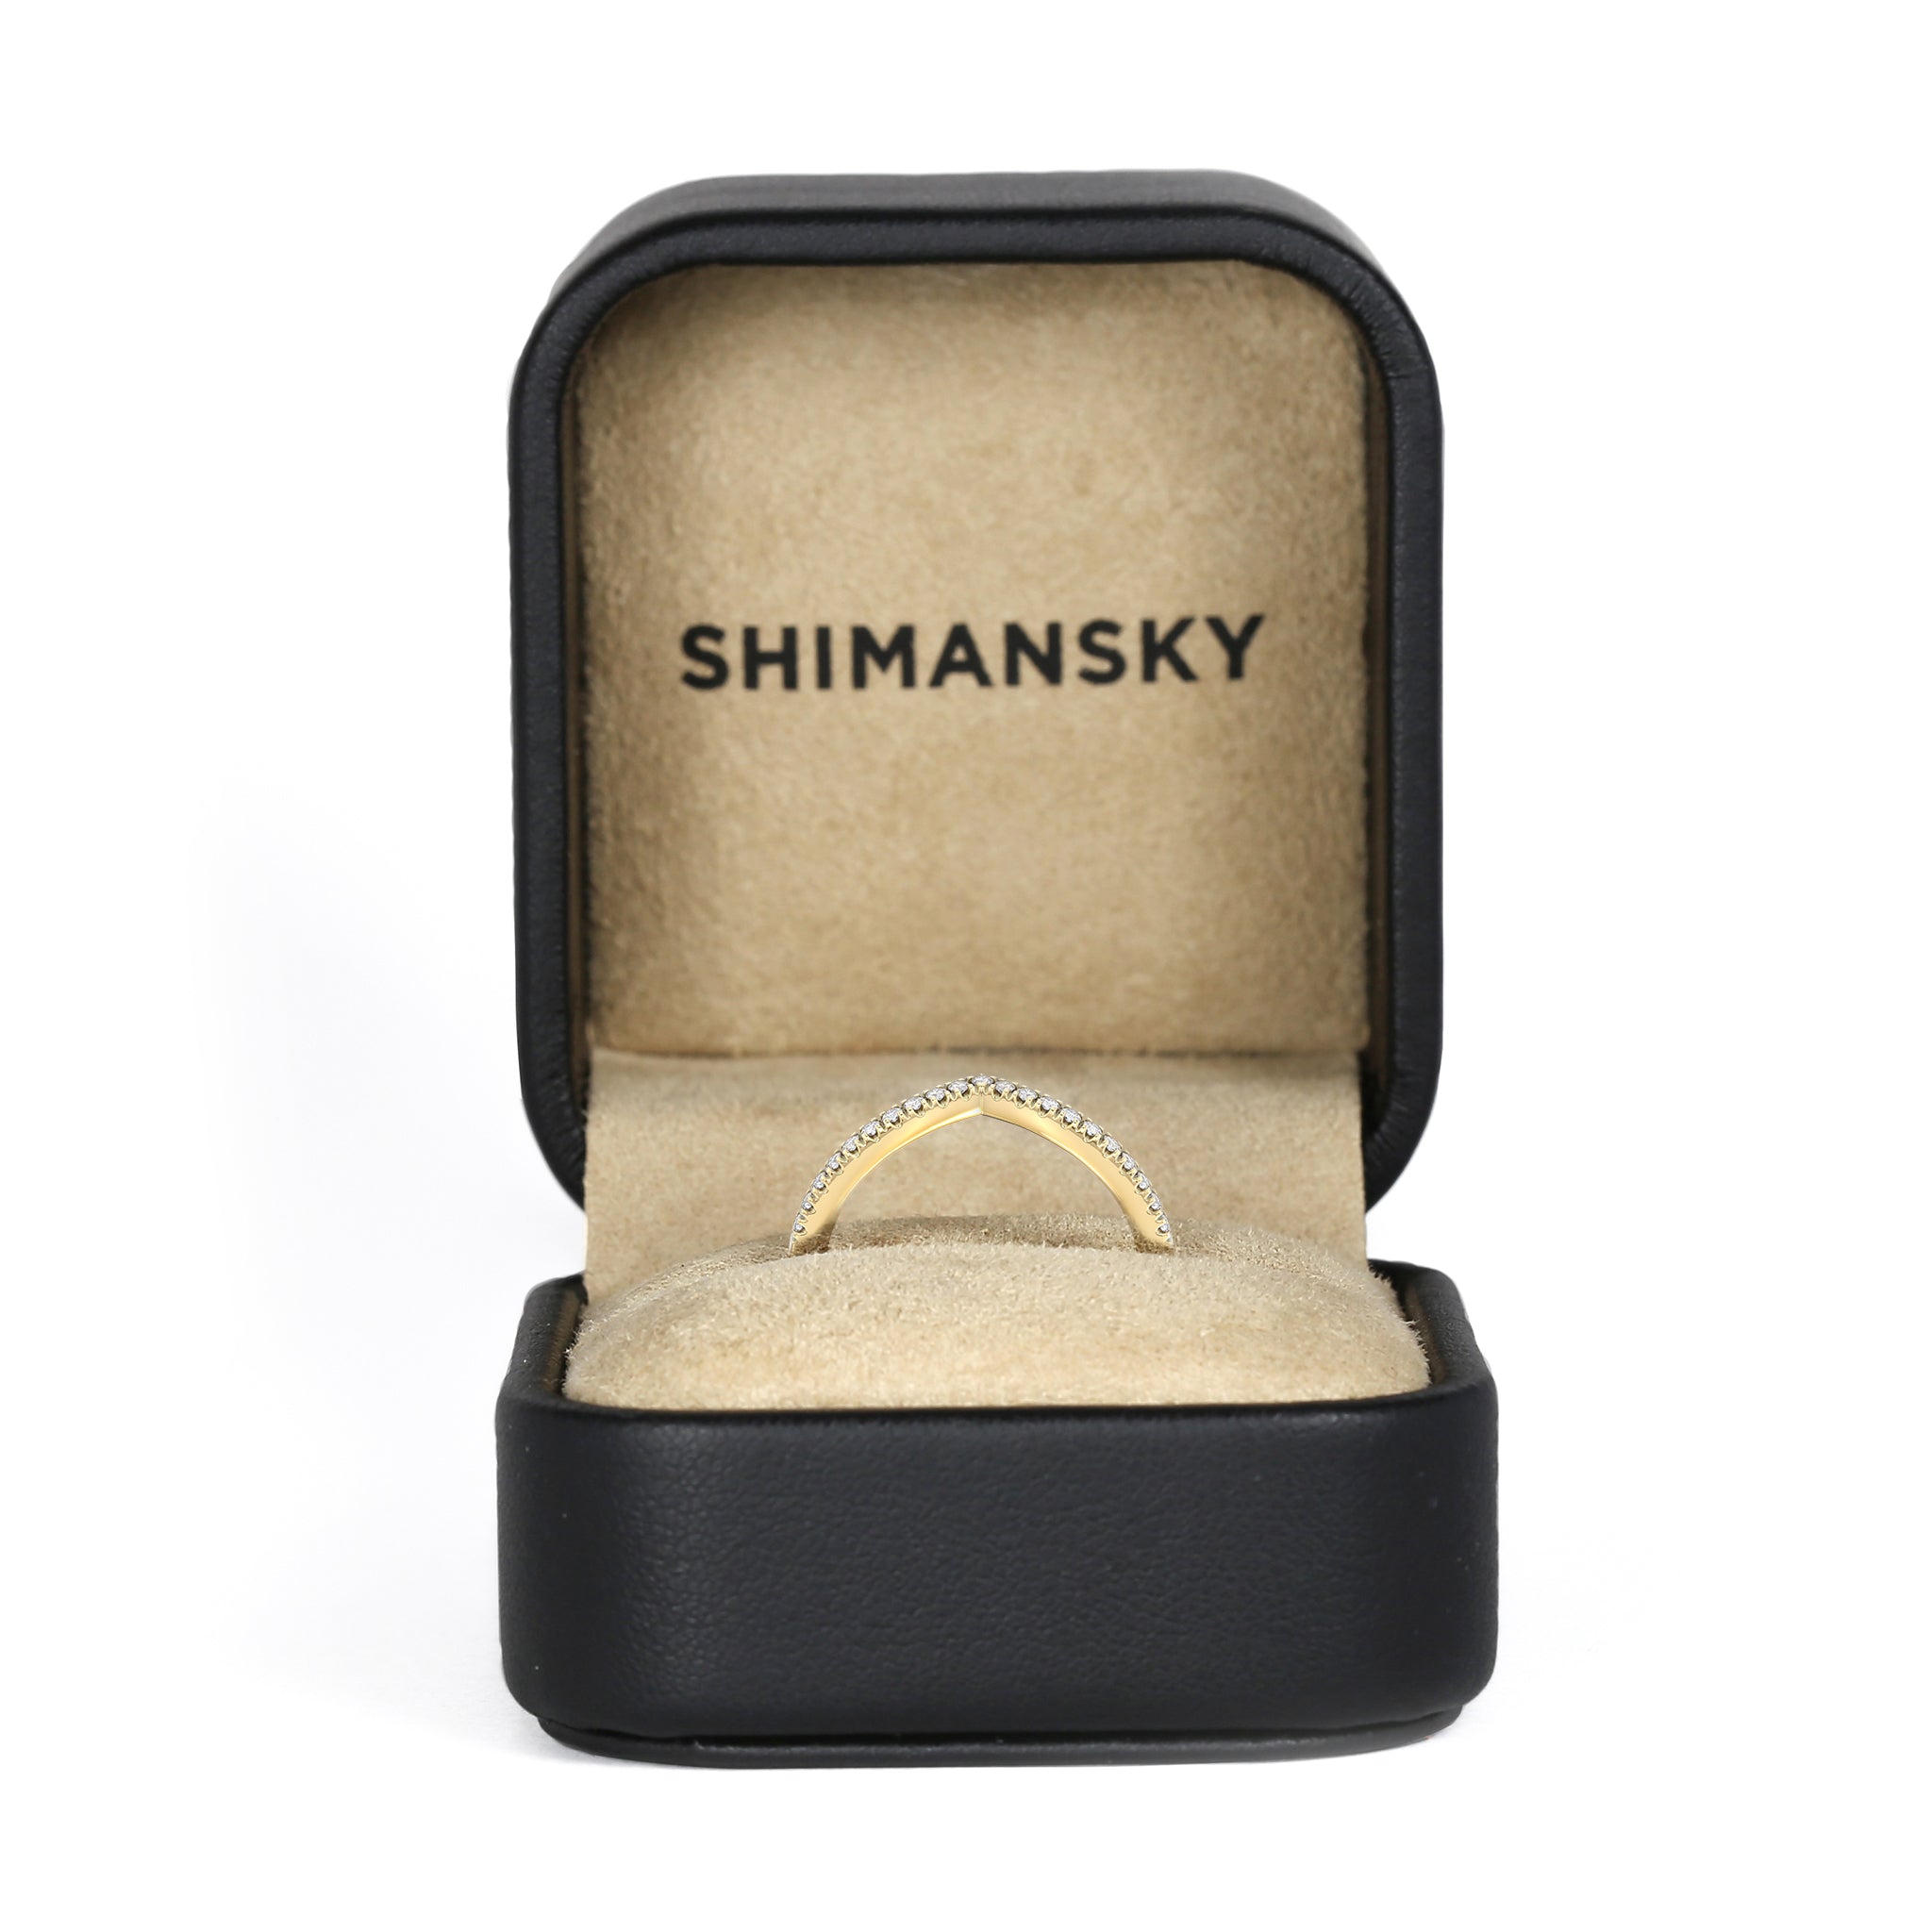 Shimansky - Wishbone Ladies Wedding Band Crafted in 18K Yellow Gold